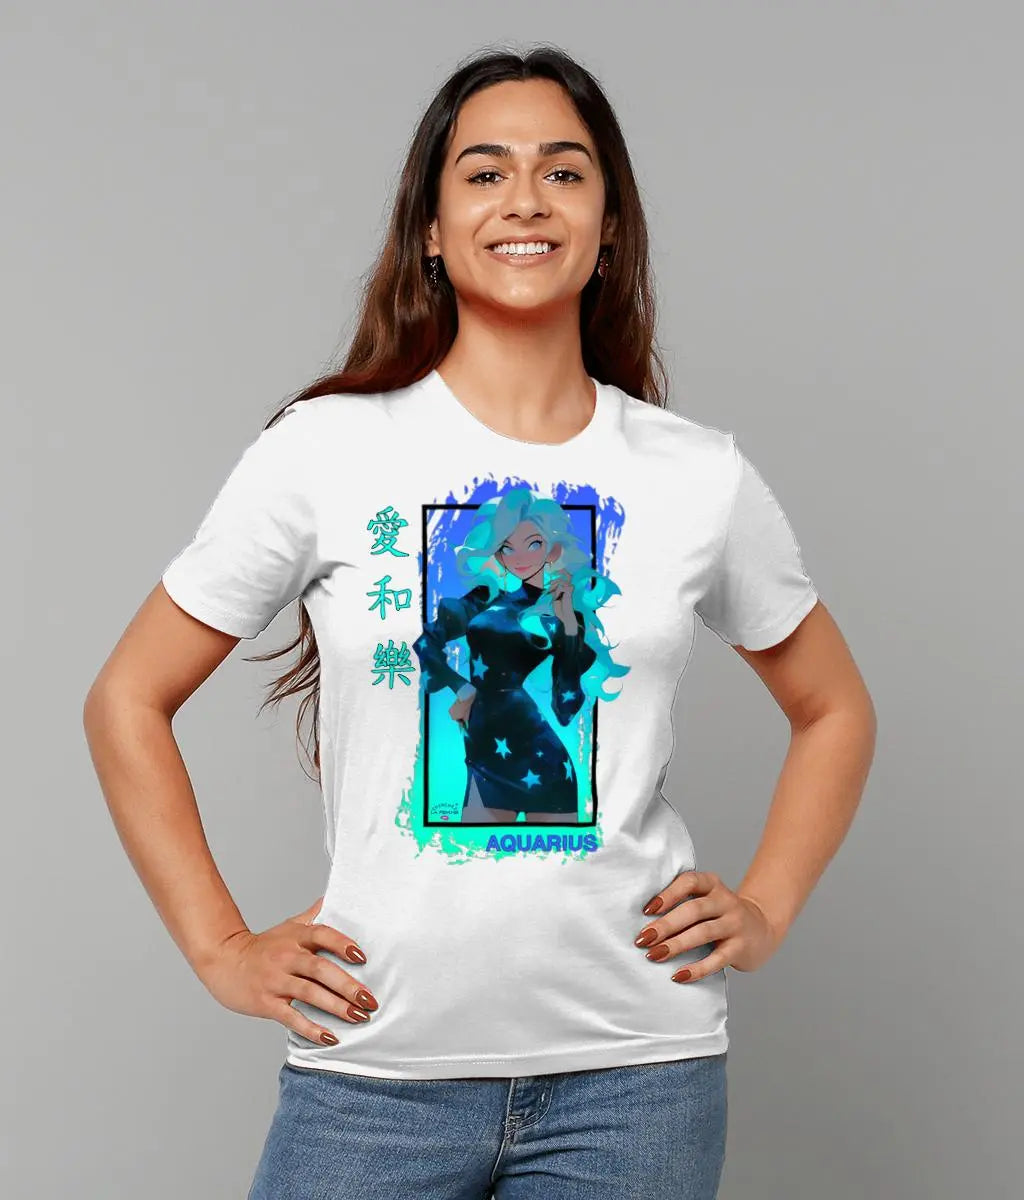 Aquarius Anime Inspired Organic T-Shirt Cherchez La Femme brand